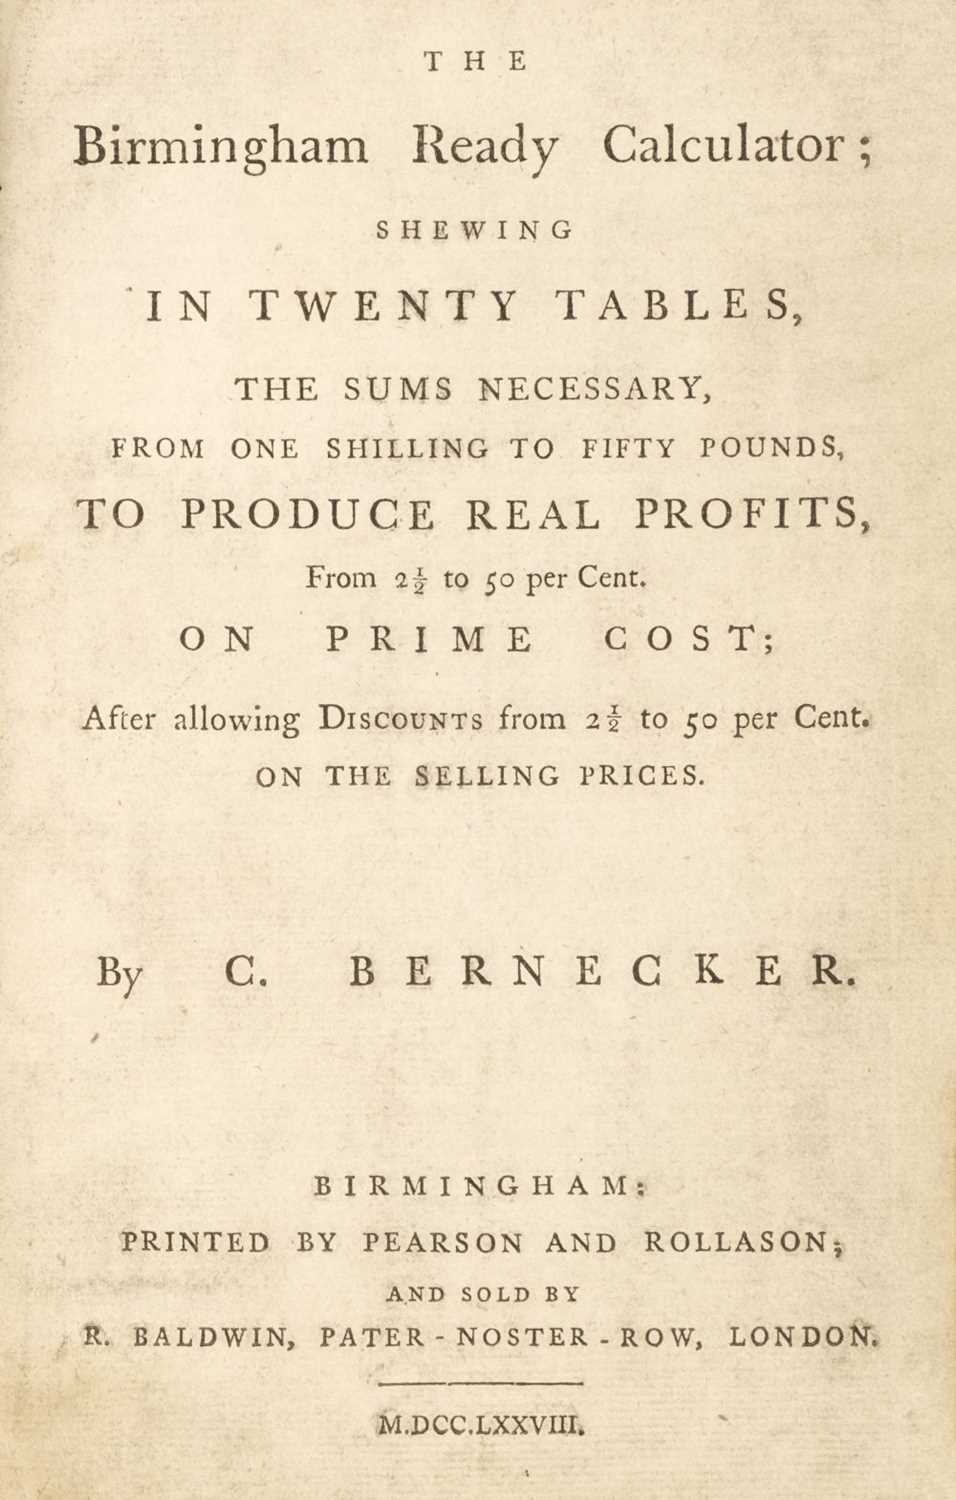 Lot 302 - Birmingham and the Midlands. Bernecker (C.). The Birmingham Ready Calculator, 1778